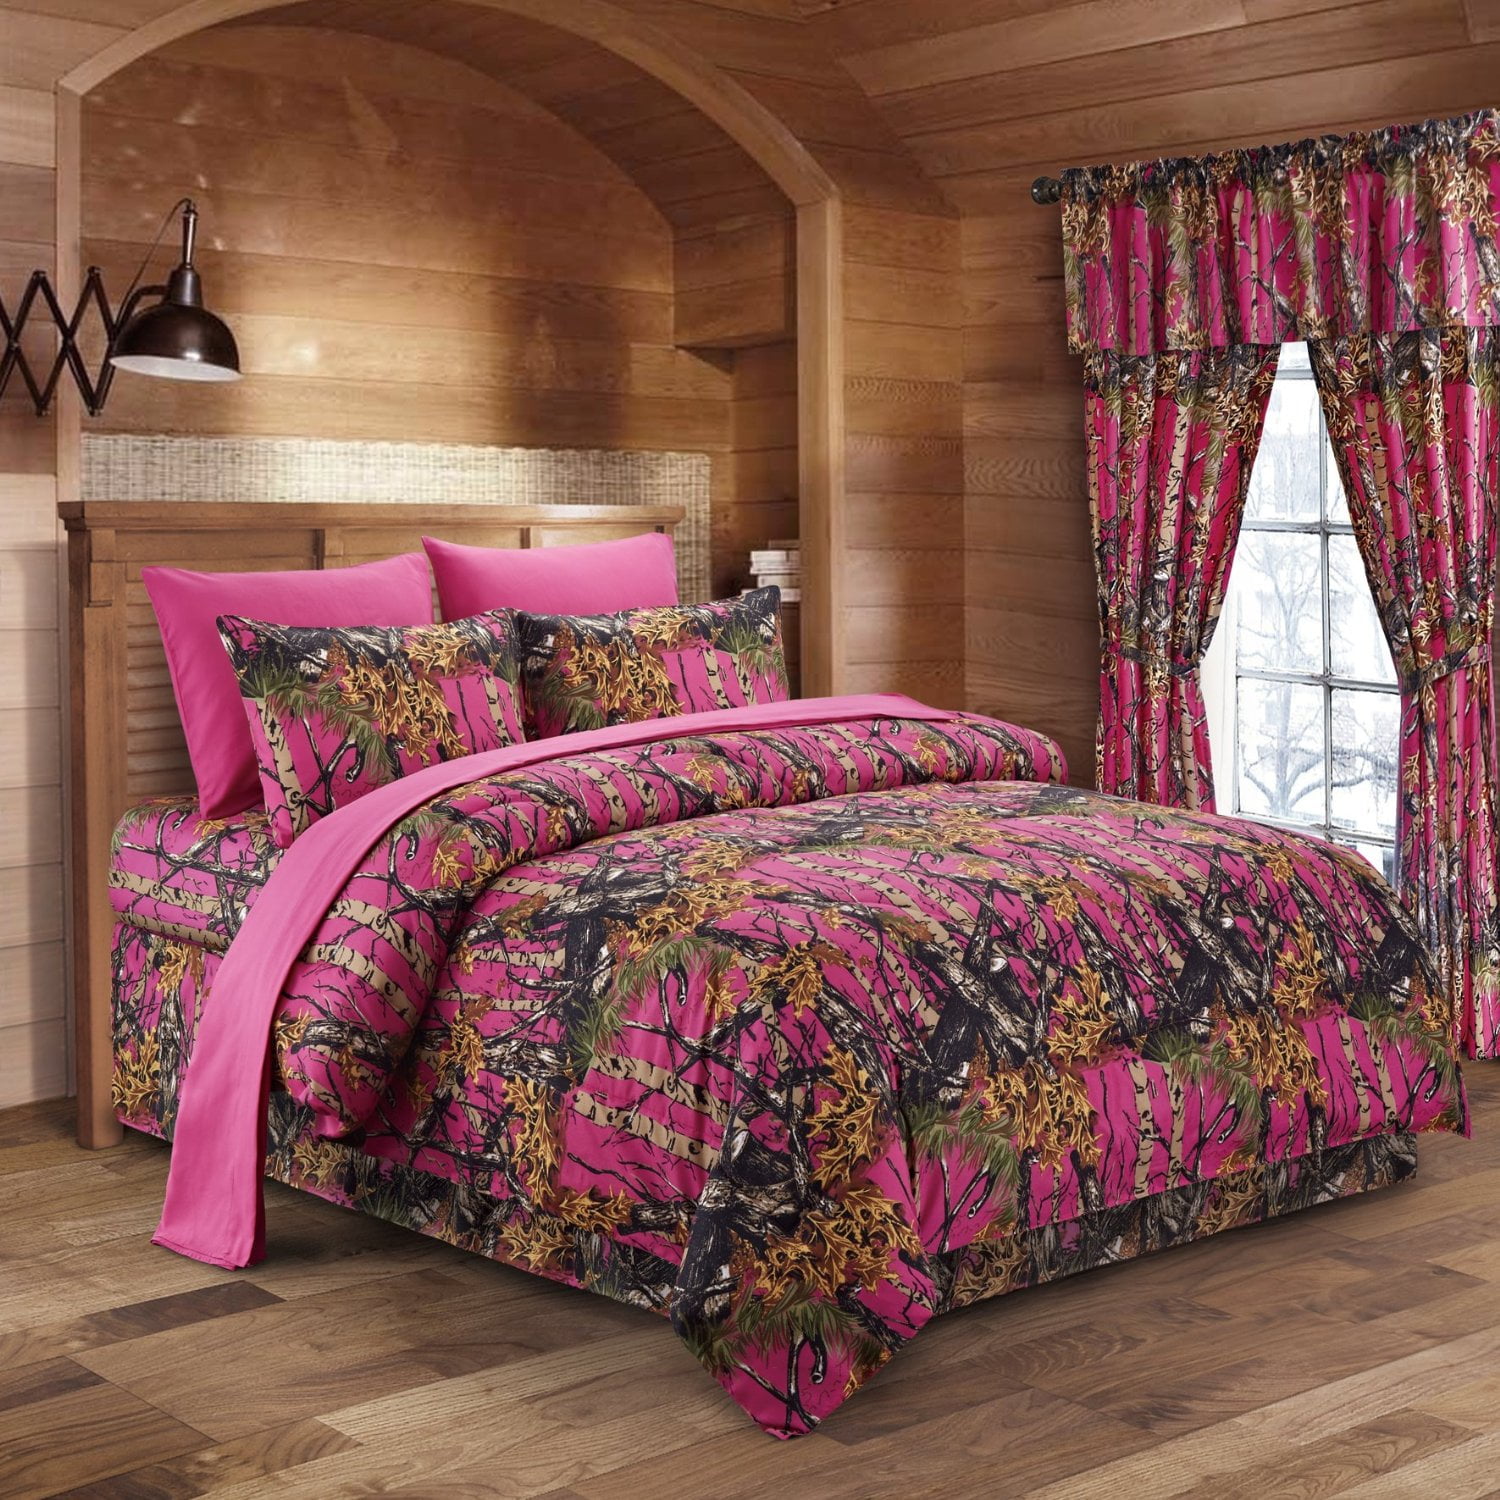 Pink Camo Sheet Set 4 Pc Realtree Bedroom Decor Camouflage MicroFiber Hunter New 